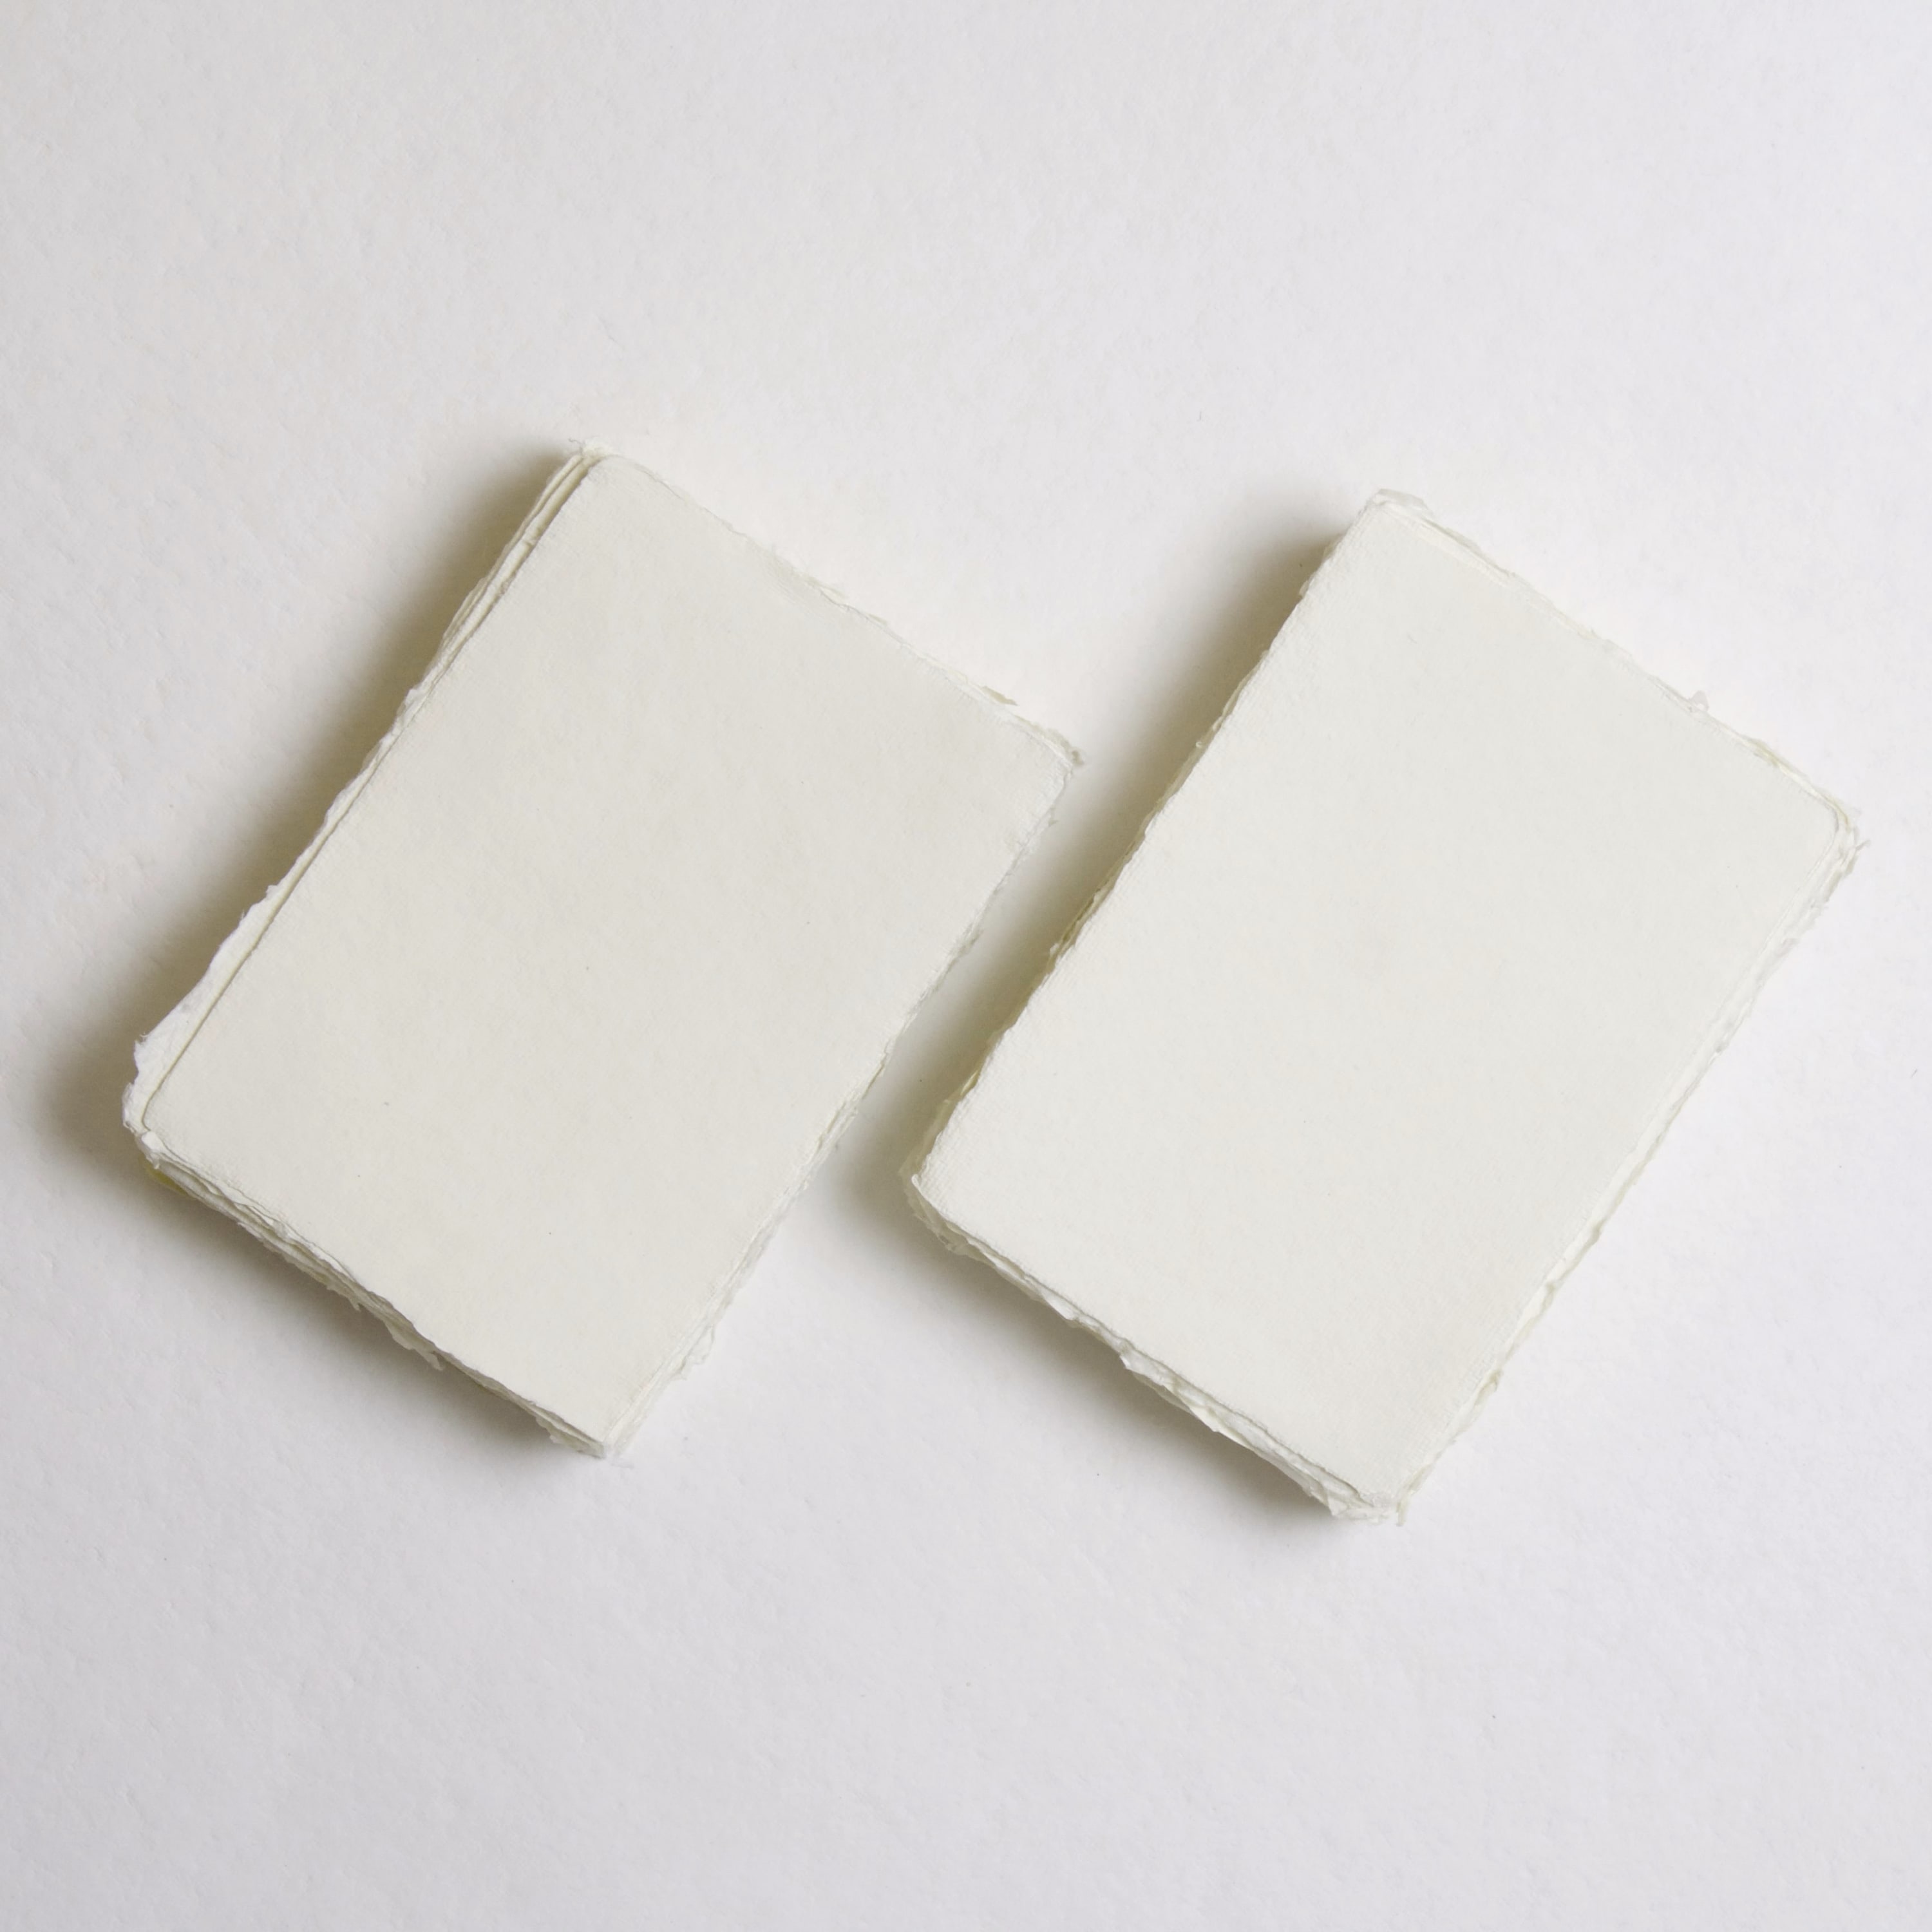 Ivory, 4.3 x 8.7, 200 gsm – Deckle edge paper – Indian Cotton Paper Co.